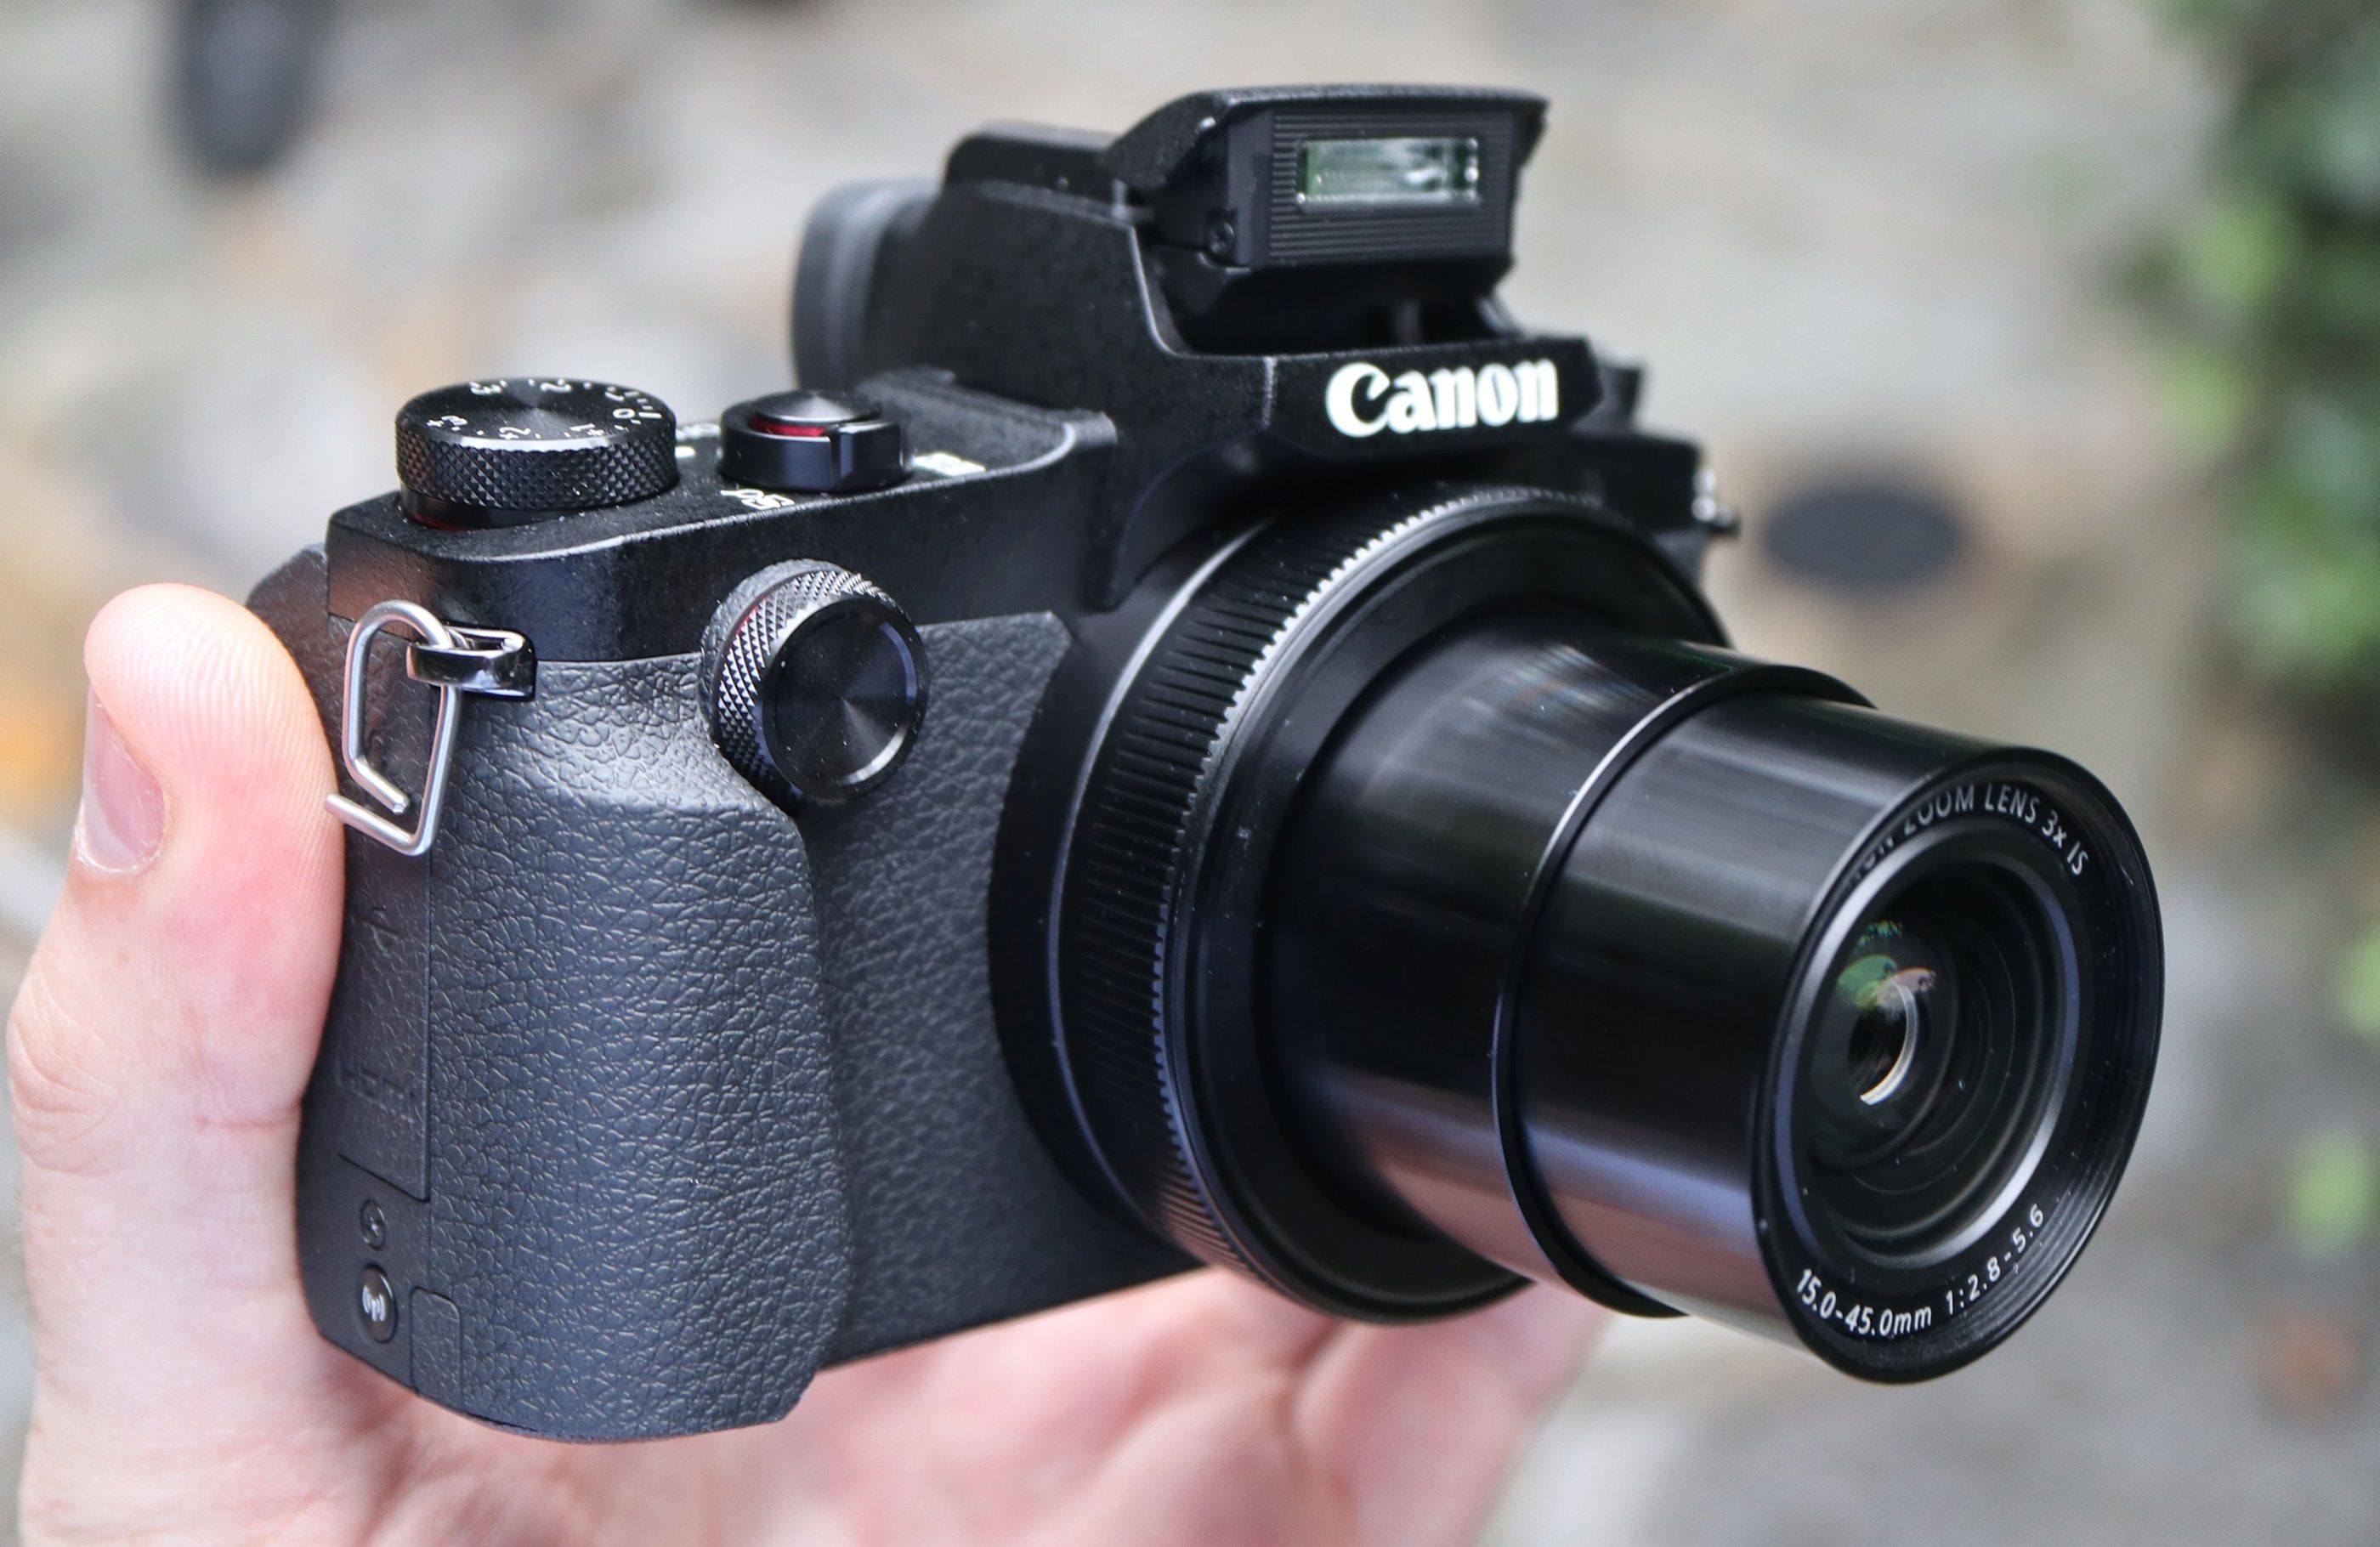 Canon Powershot G1 X Mark III Camera Review